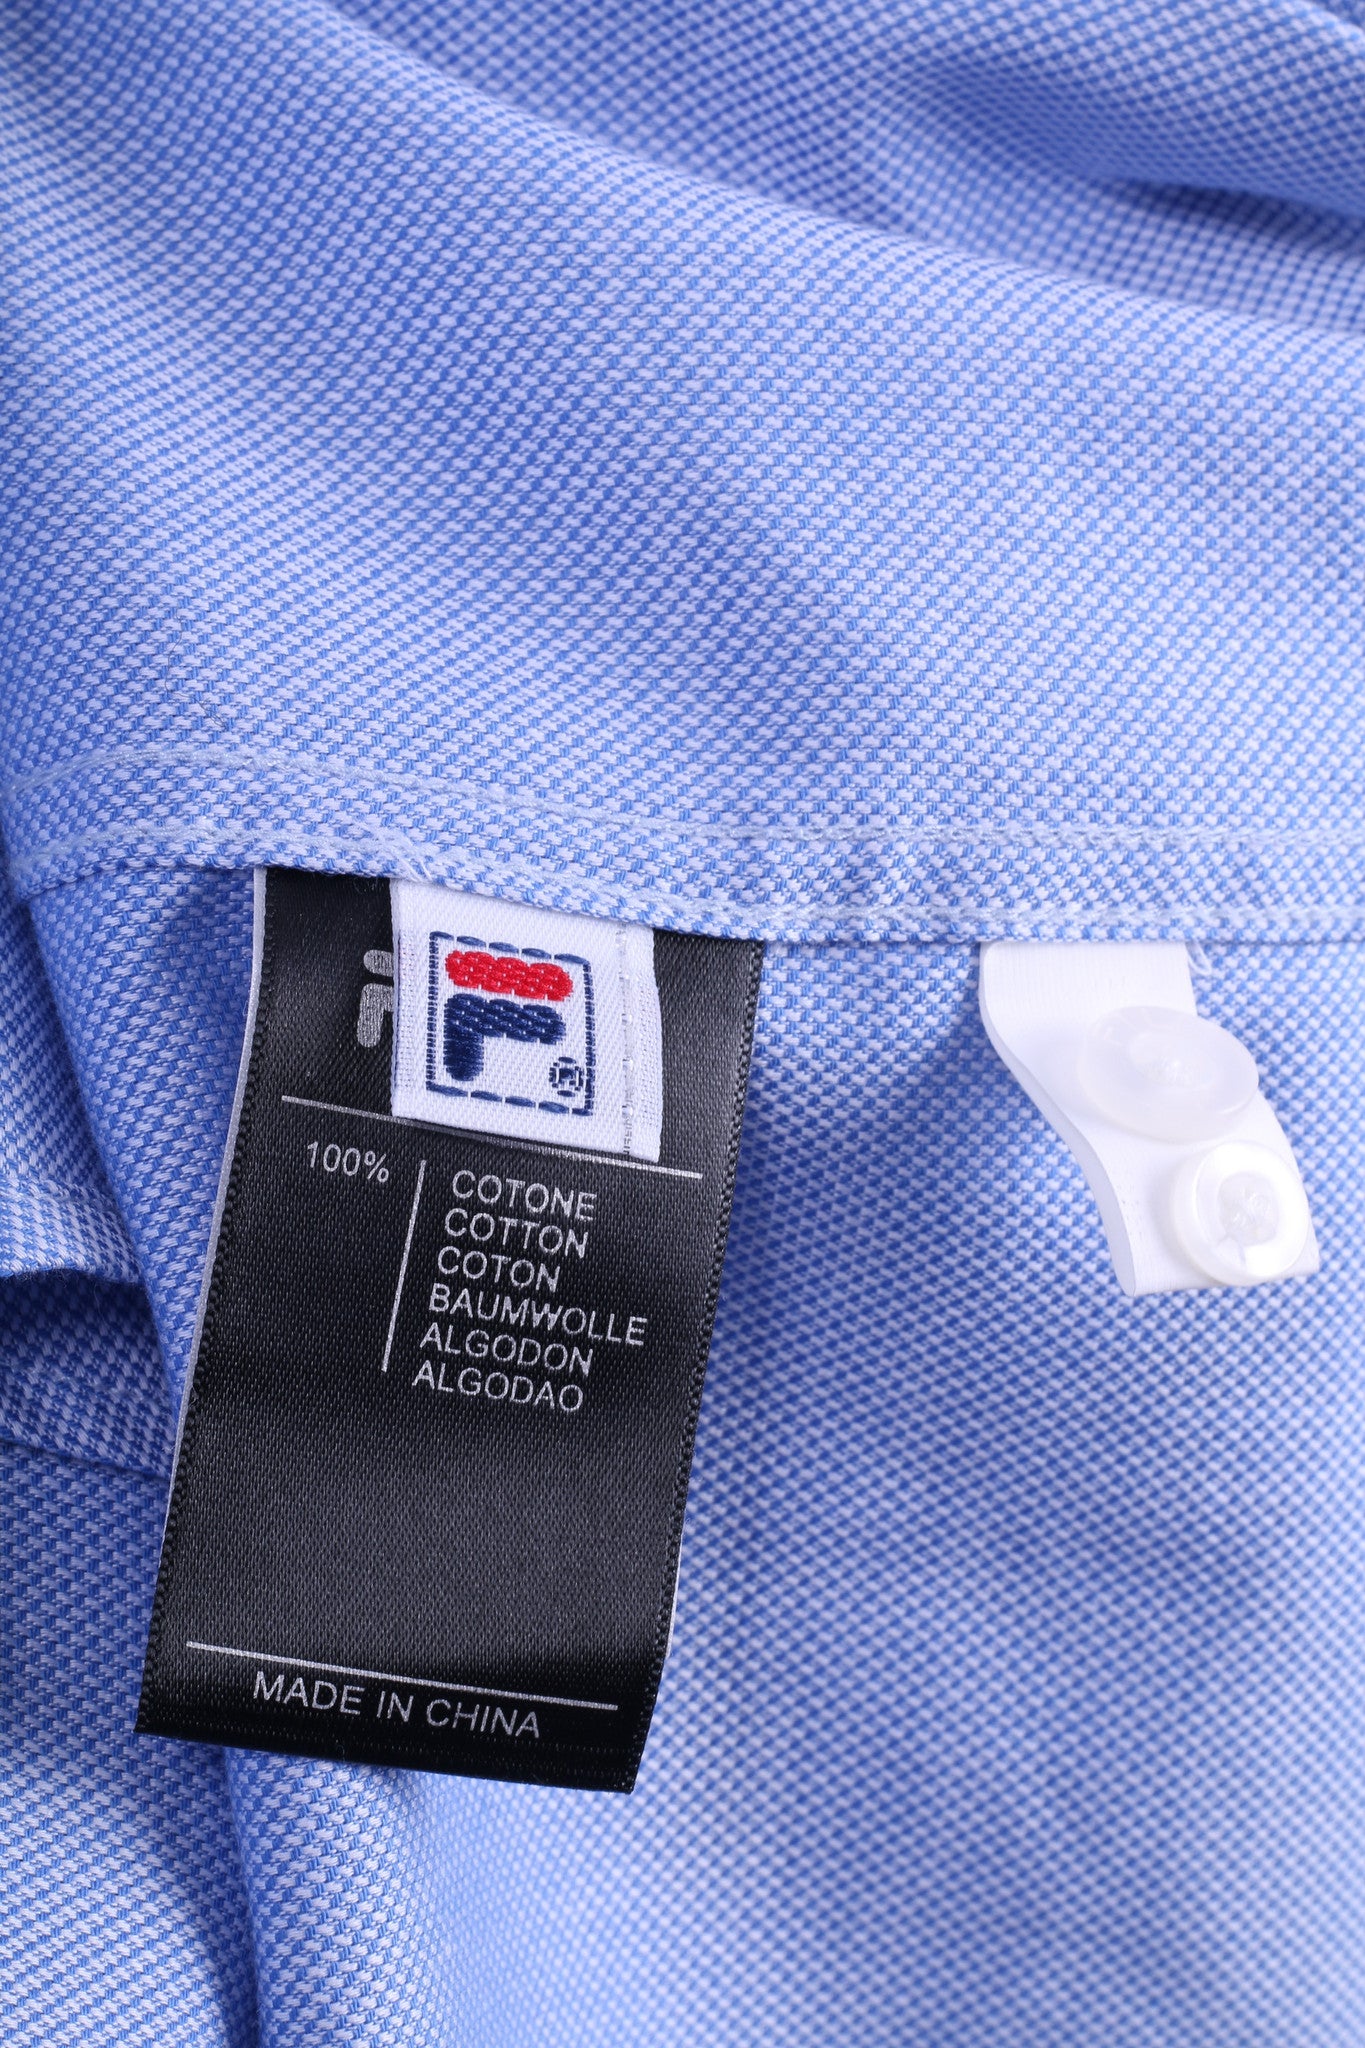 New Fila Mens 2XL Casual Shirt Long Sleeve Blue Checkered Cotton - RetrospectClothes